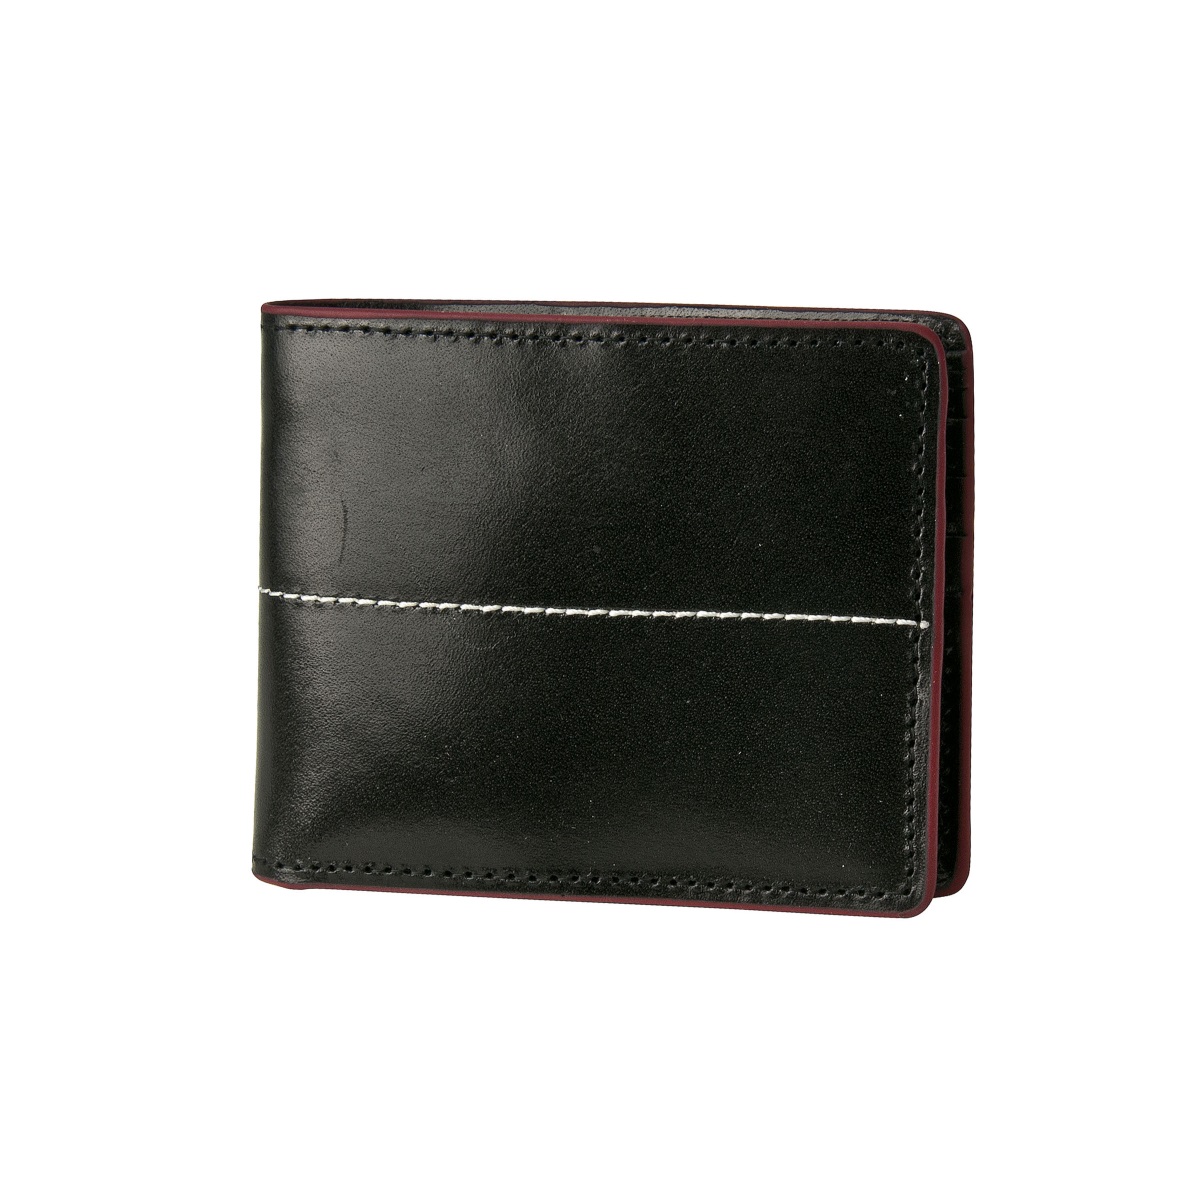 J.FOLD Thunderbird Leather Wallet - Black/Red